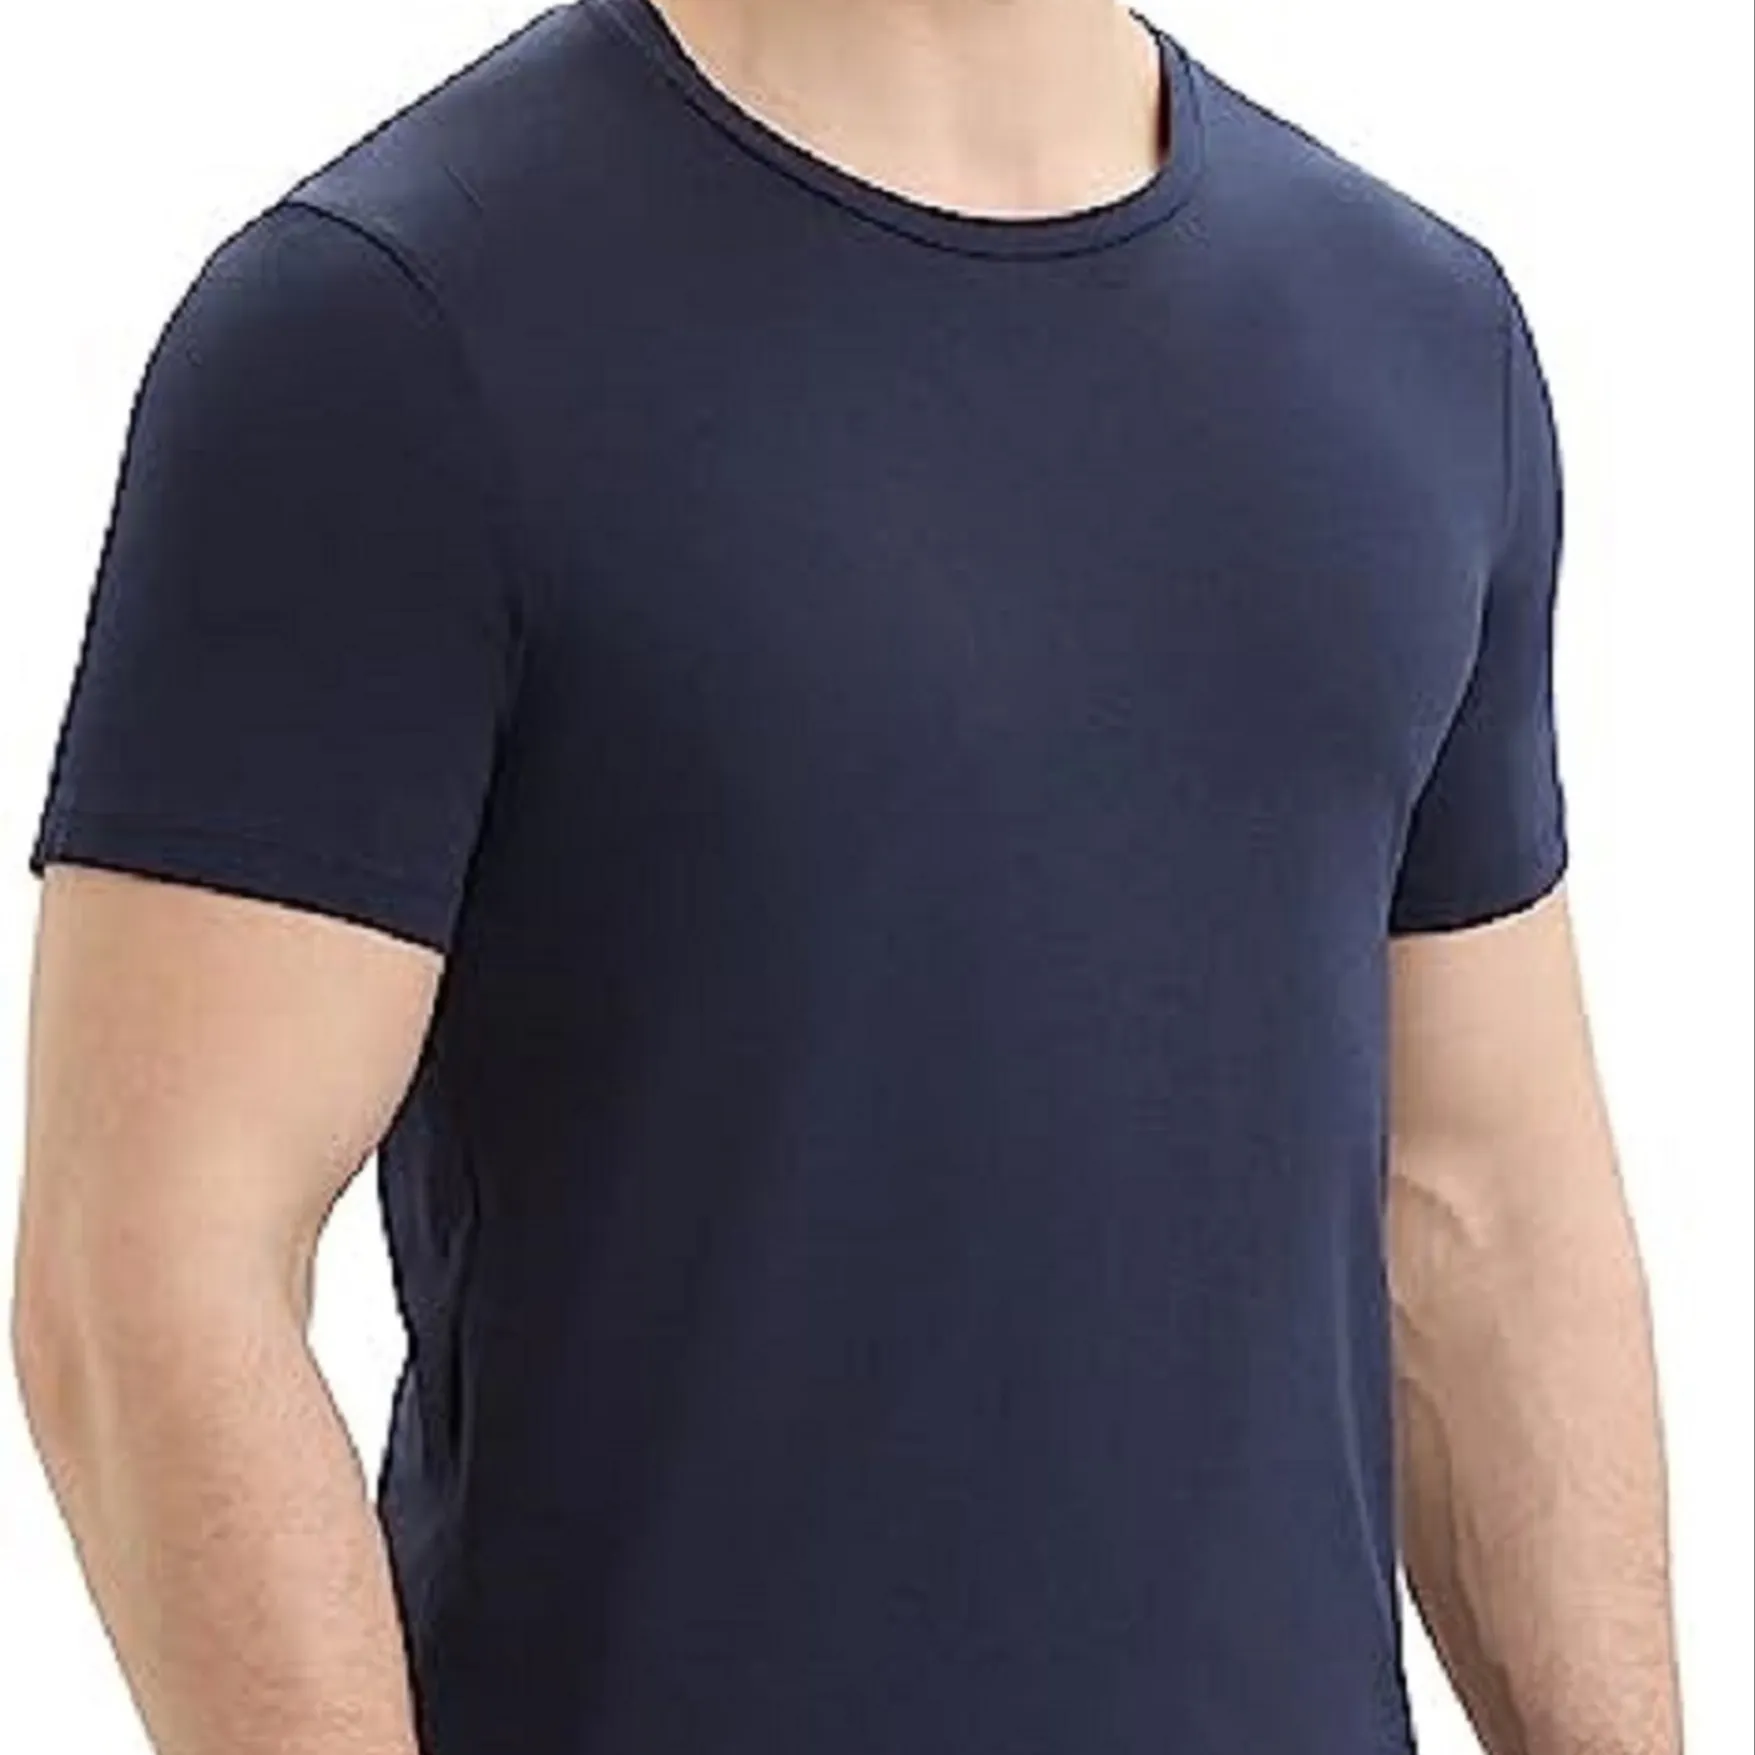 Merino Wool Shirt And Thermal Underwear For Men Short Sleeve Cotton T-shirt Basic Casual Shirt